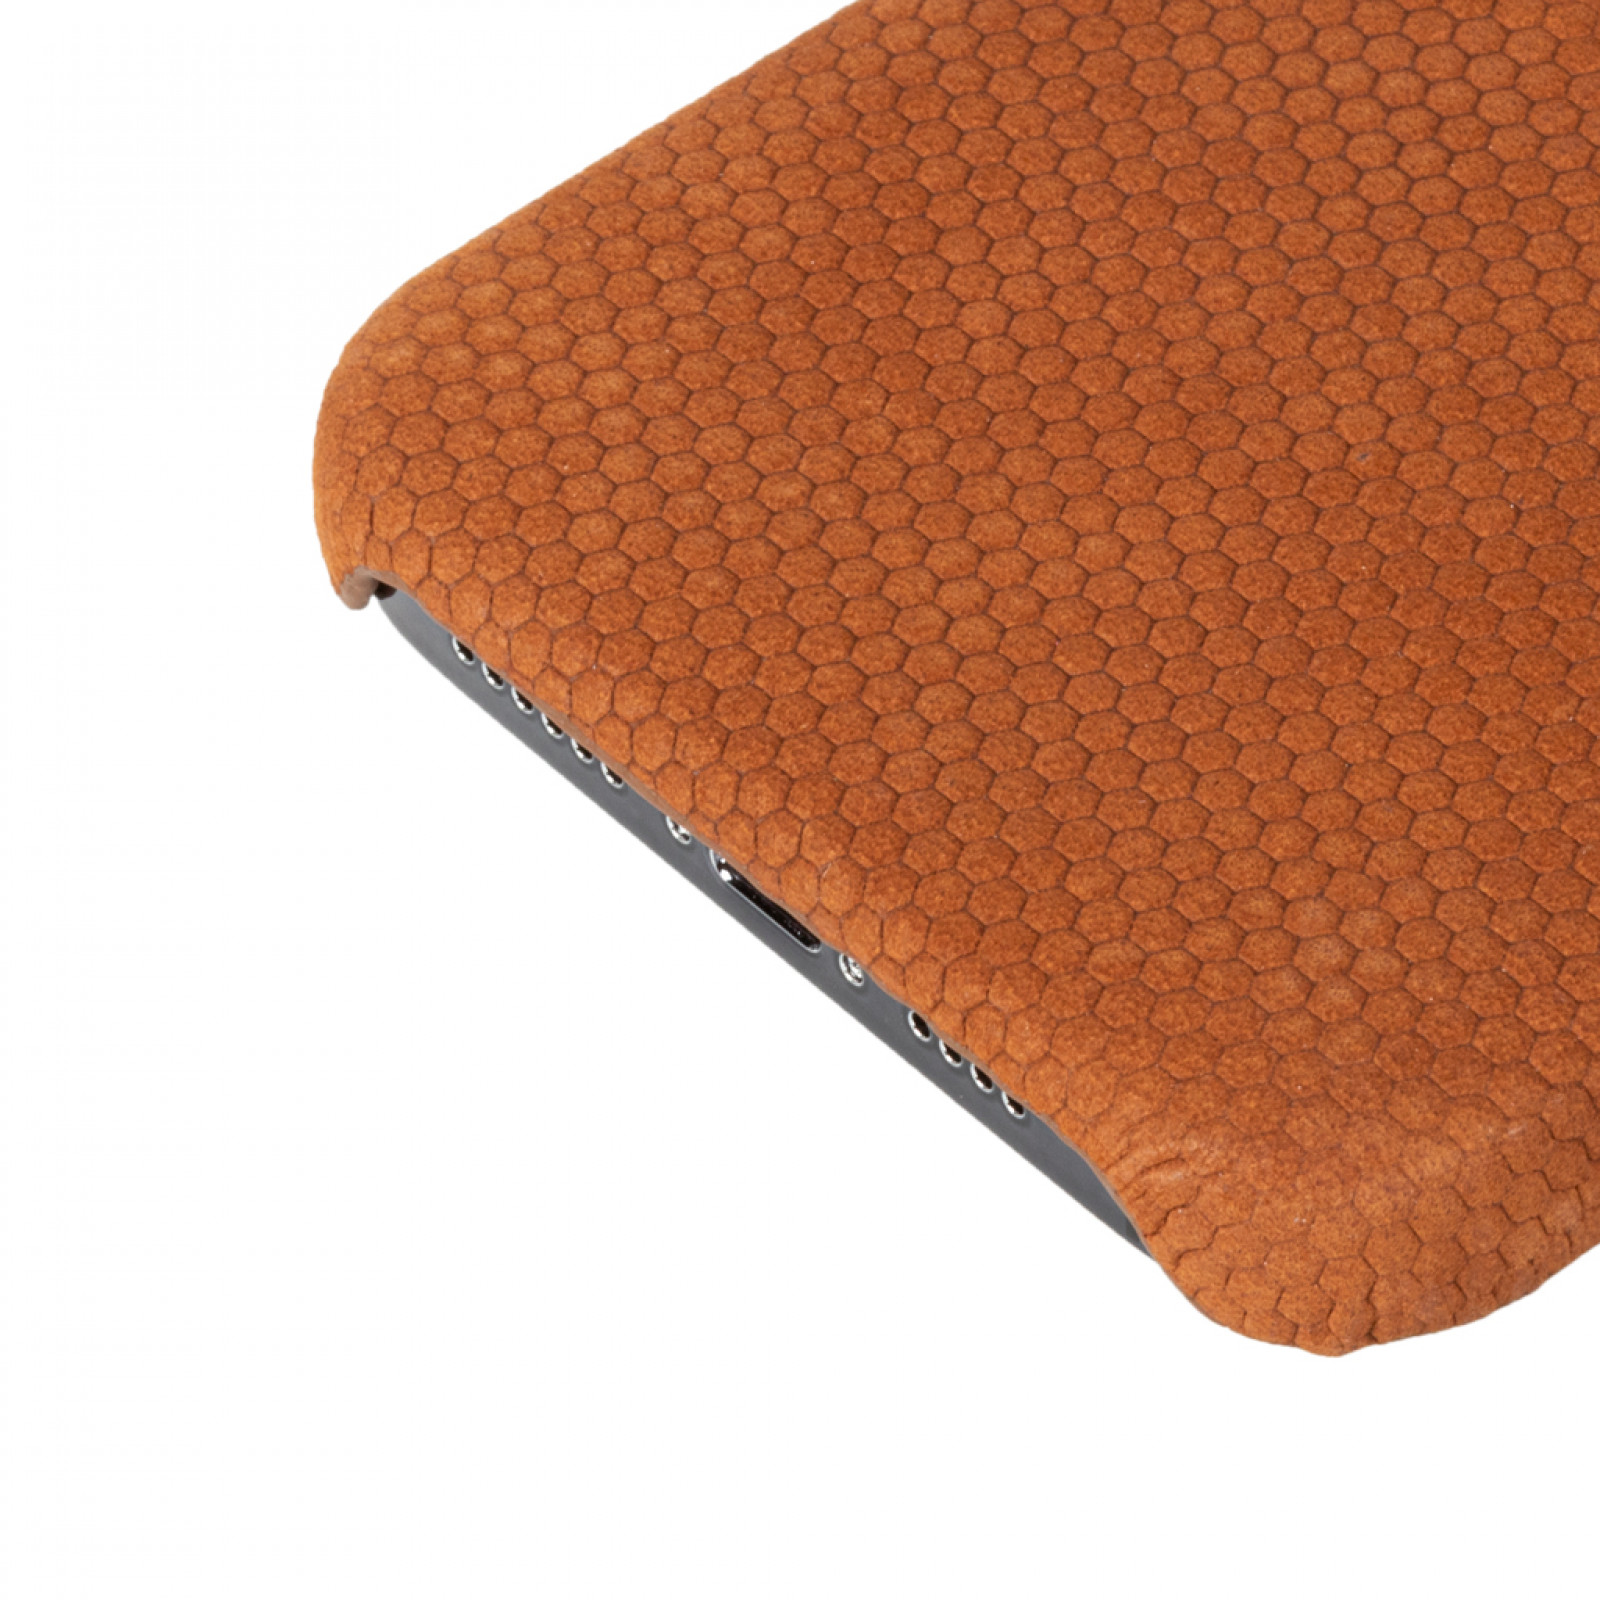 Гръб Krusell Leather Cover за Iphone 13 mini - Cognac